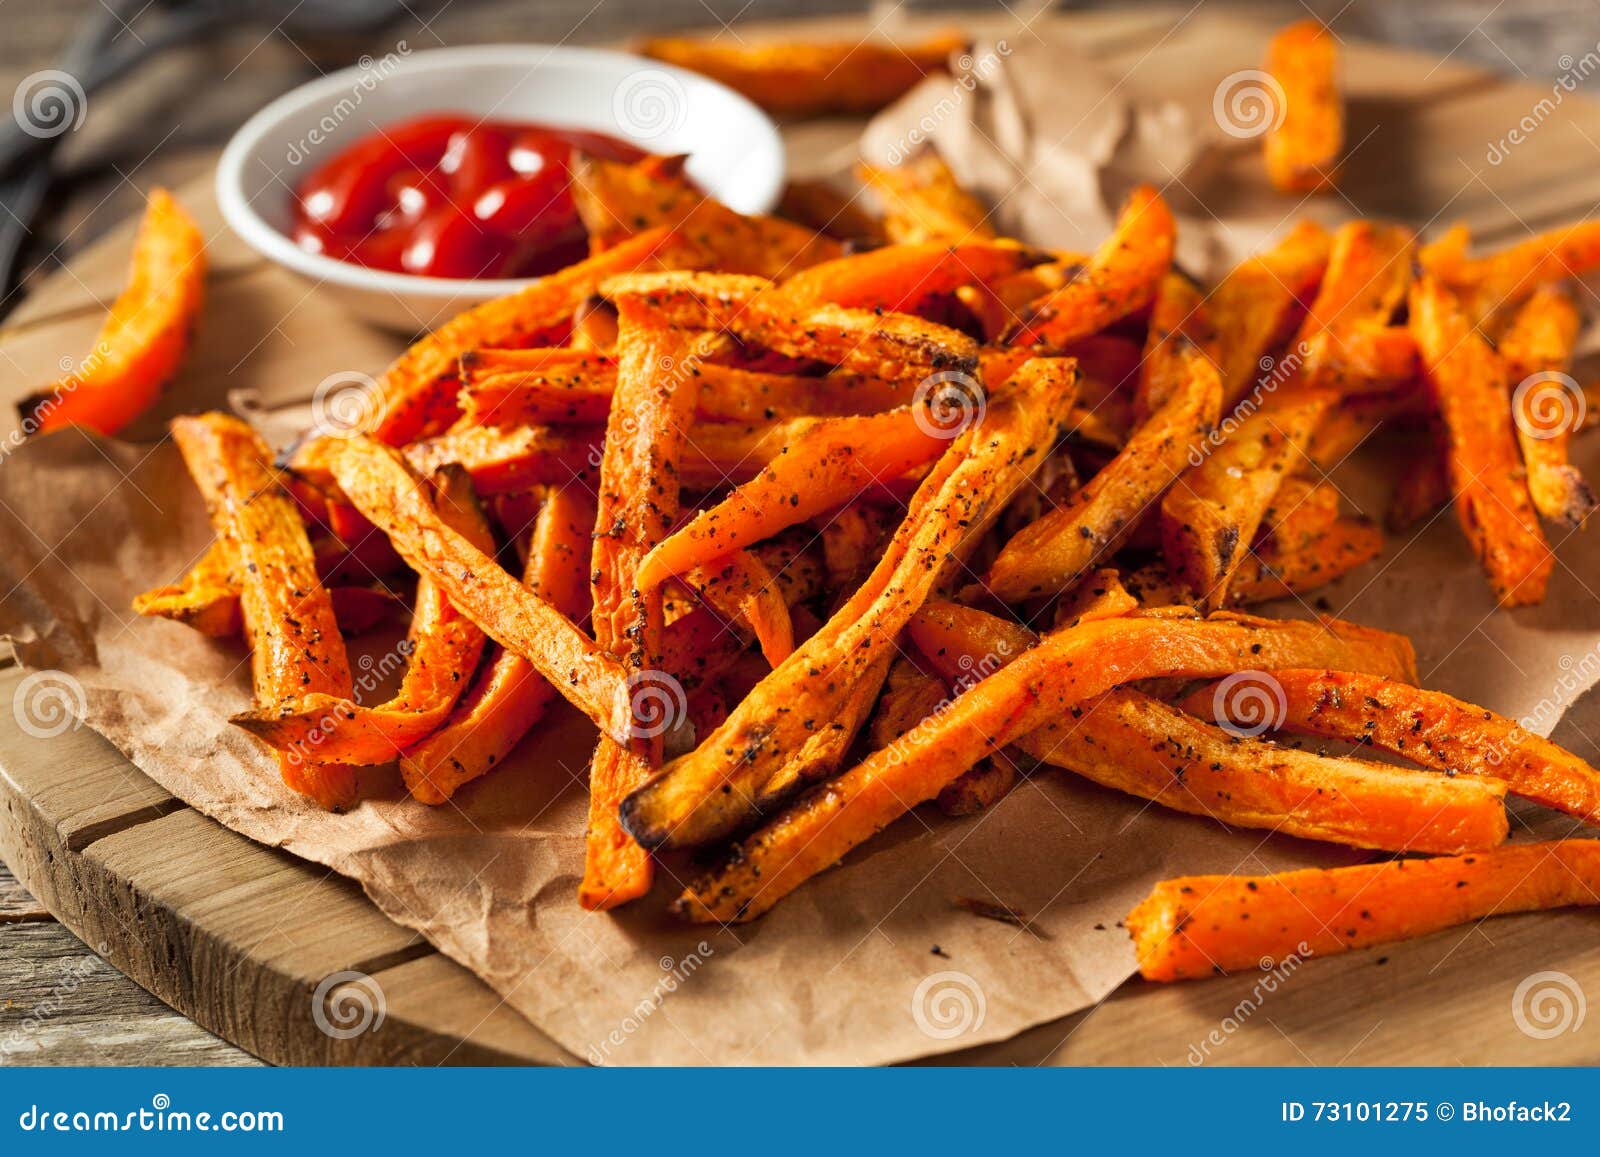 healthy homemade baked sweet potato fries